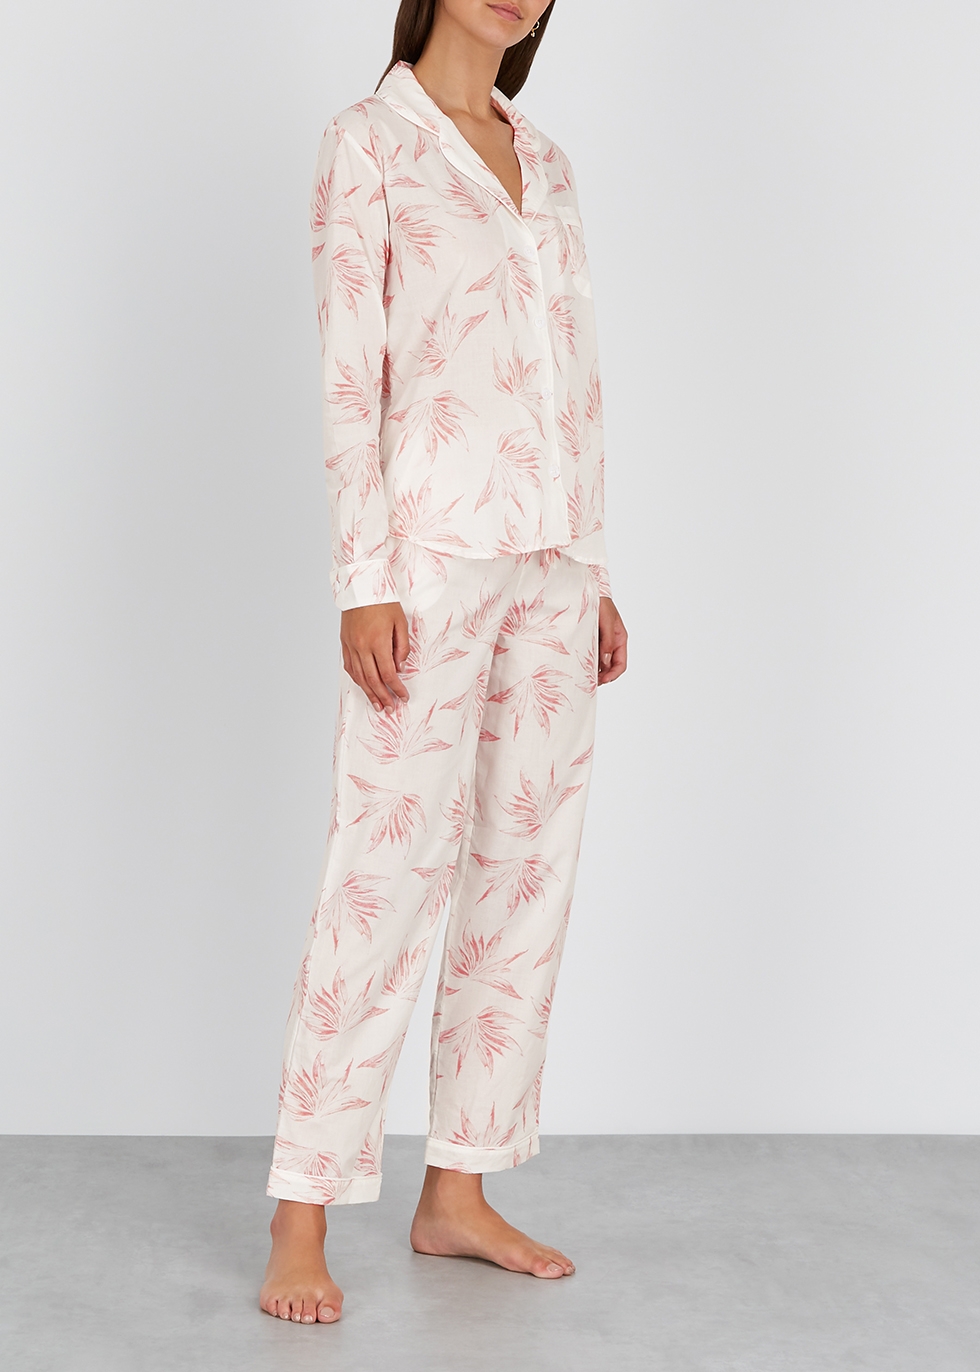 Desmond & Dempsey Deia printed cotton pyjama set - Harvey Nichols